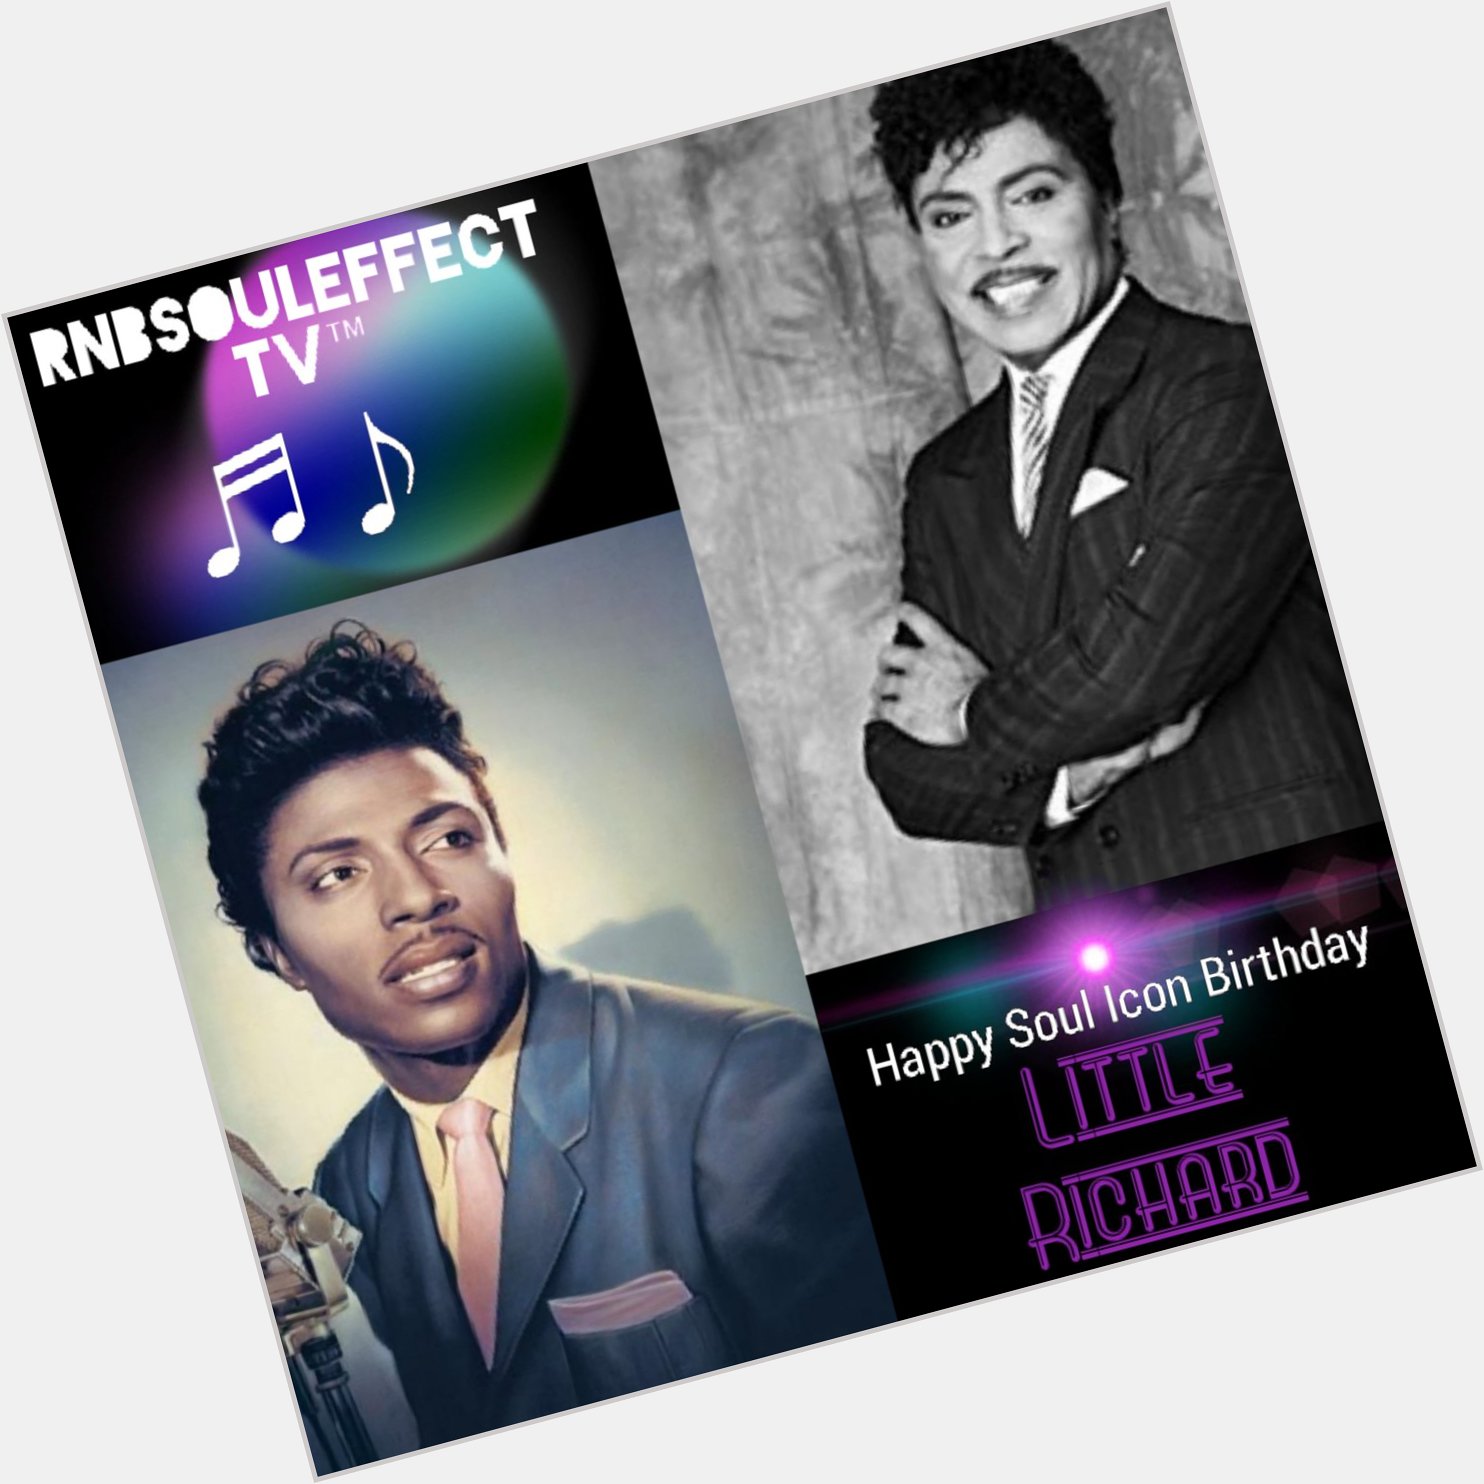 Happy Soul Icon Birthday Little Richard       